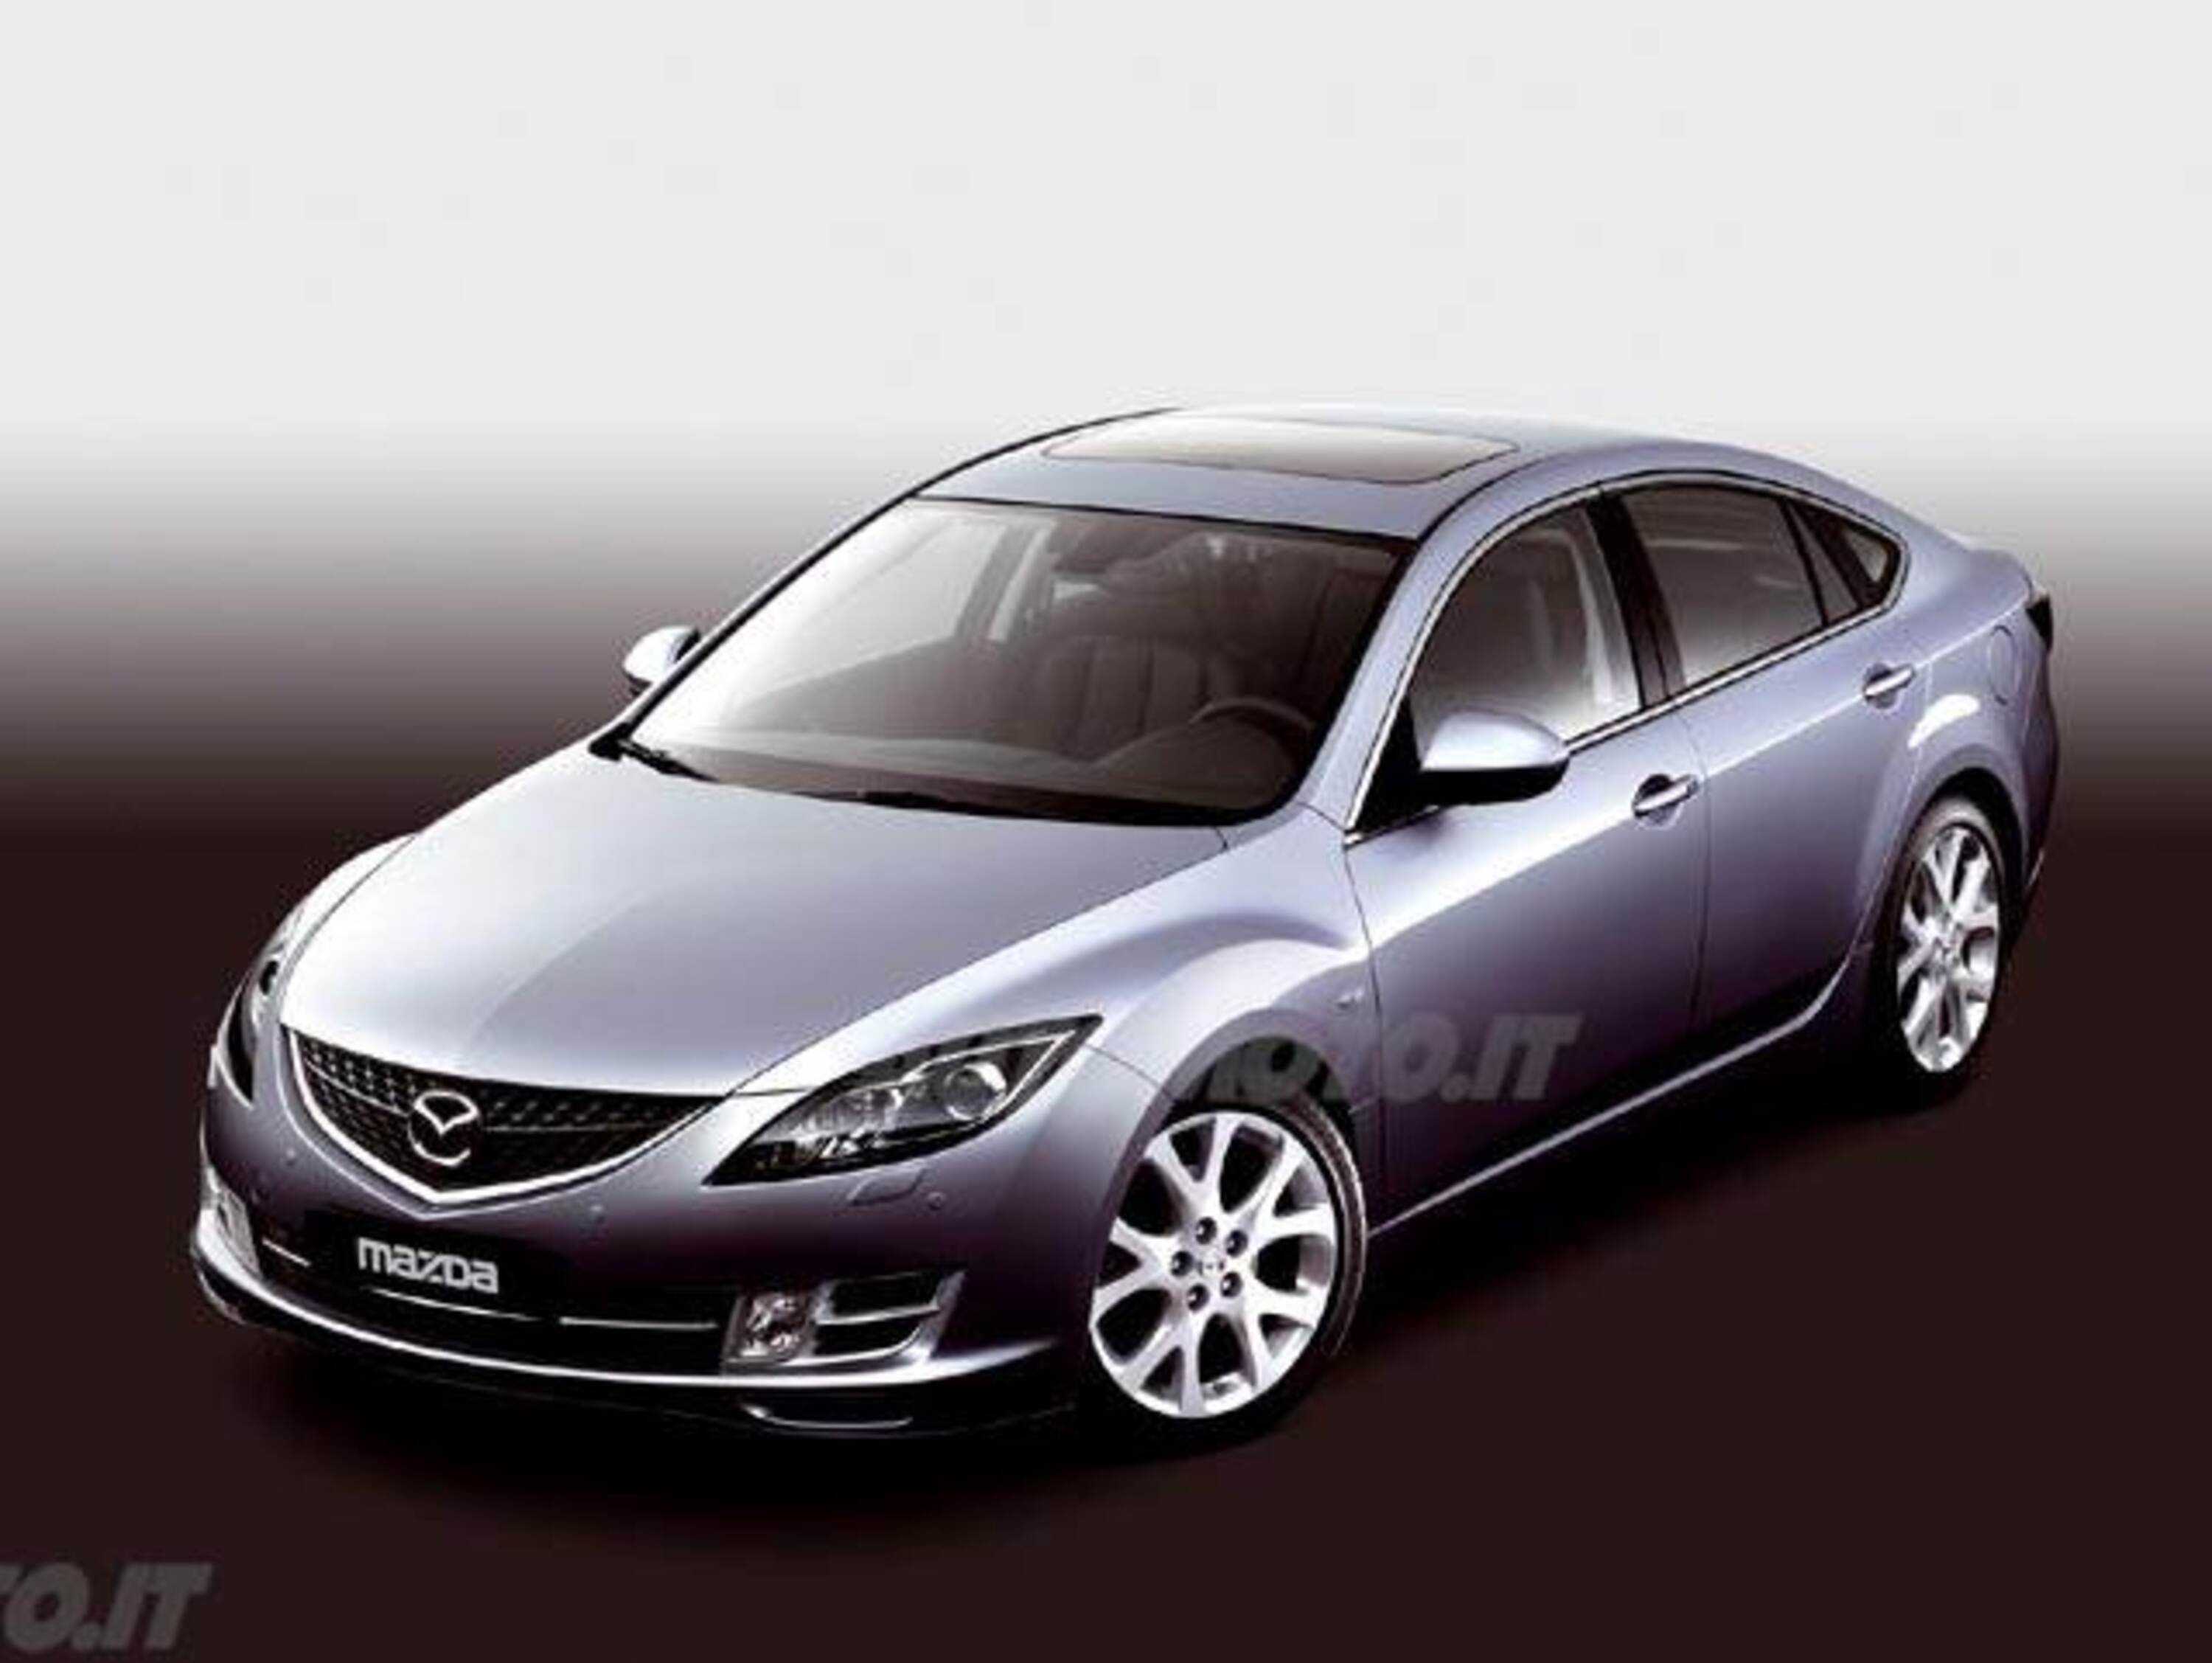 Mazda Mazda6 Hatchback 2.2 CD 16V 163CV Sp. Tour. Luxury